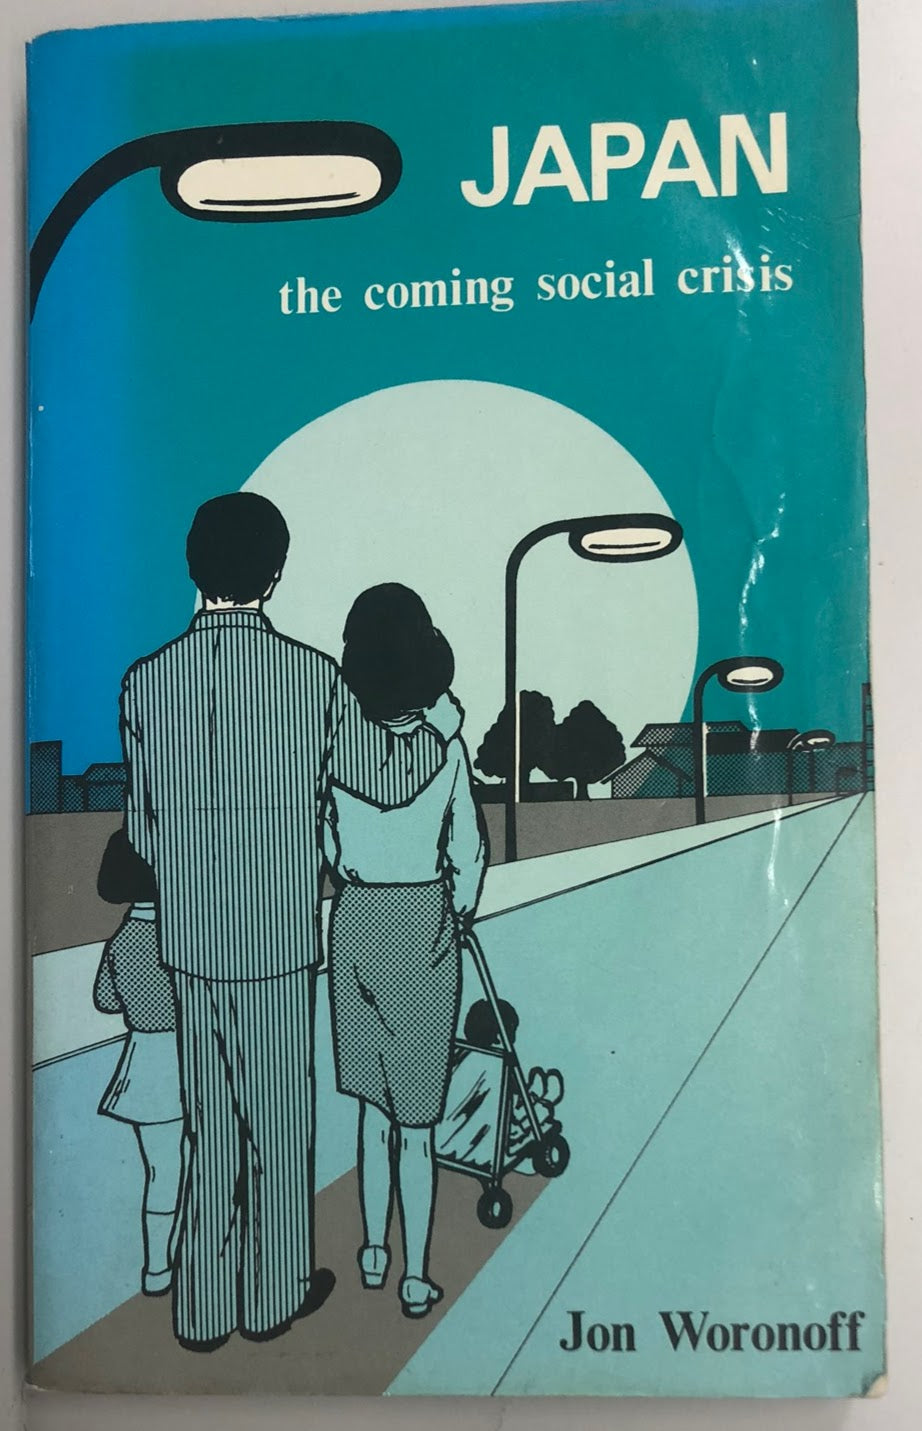 Japan, the coming social crisis : Jon Woronoff